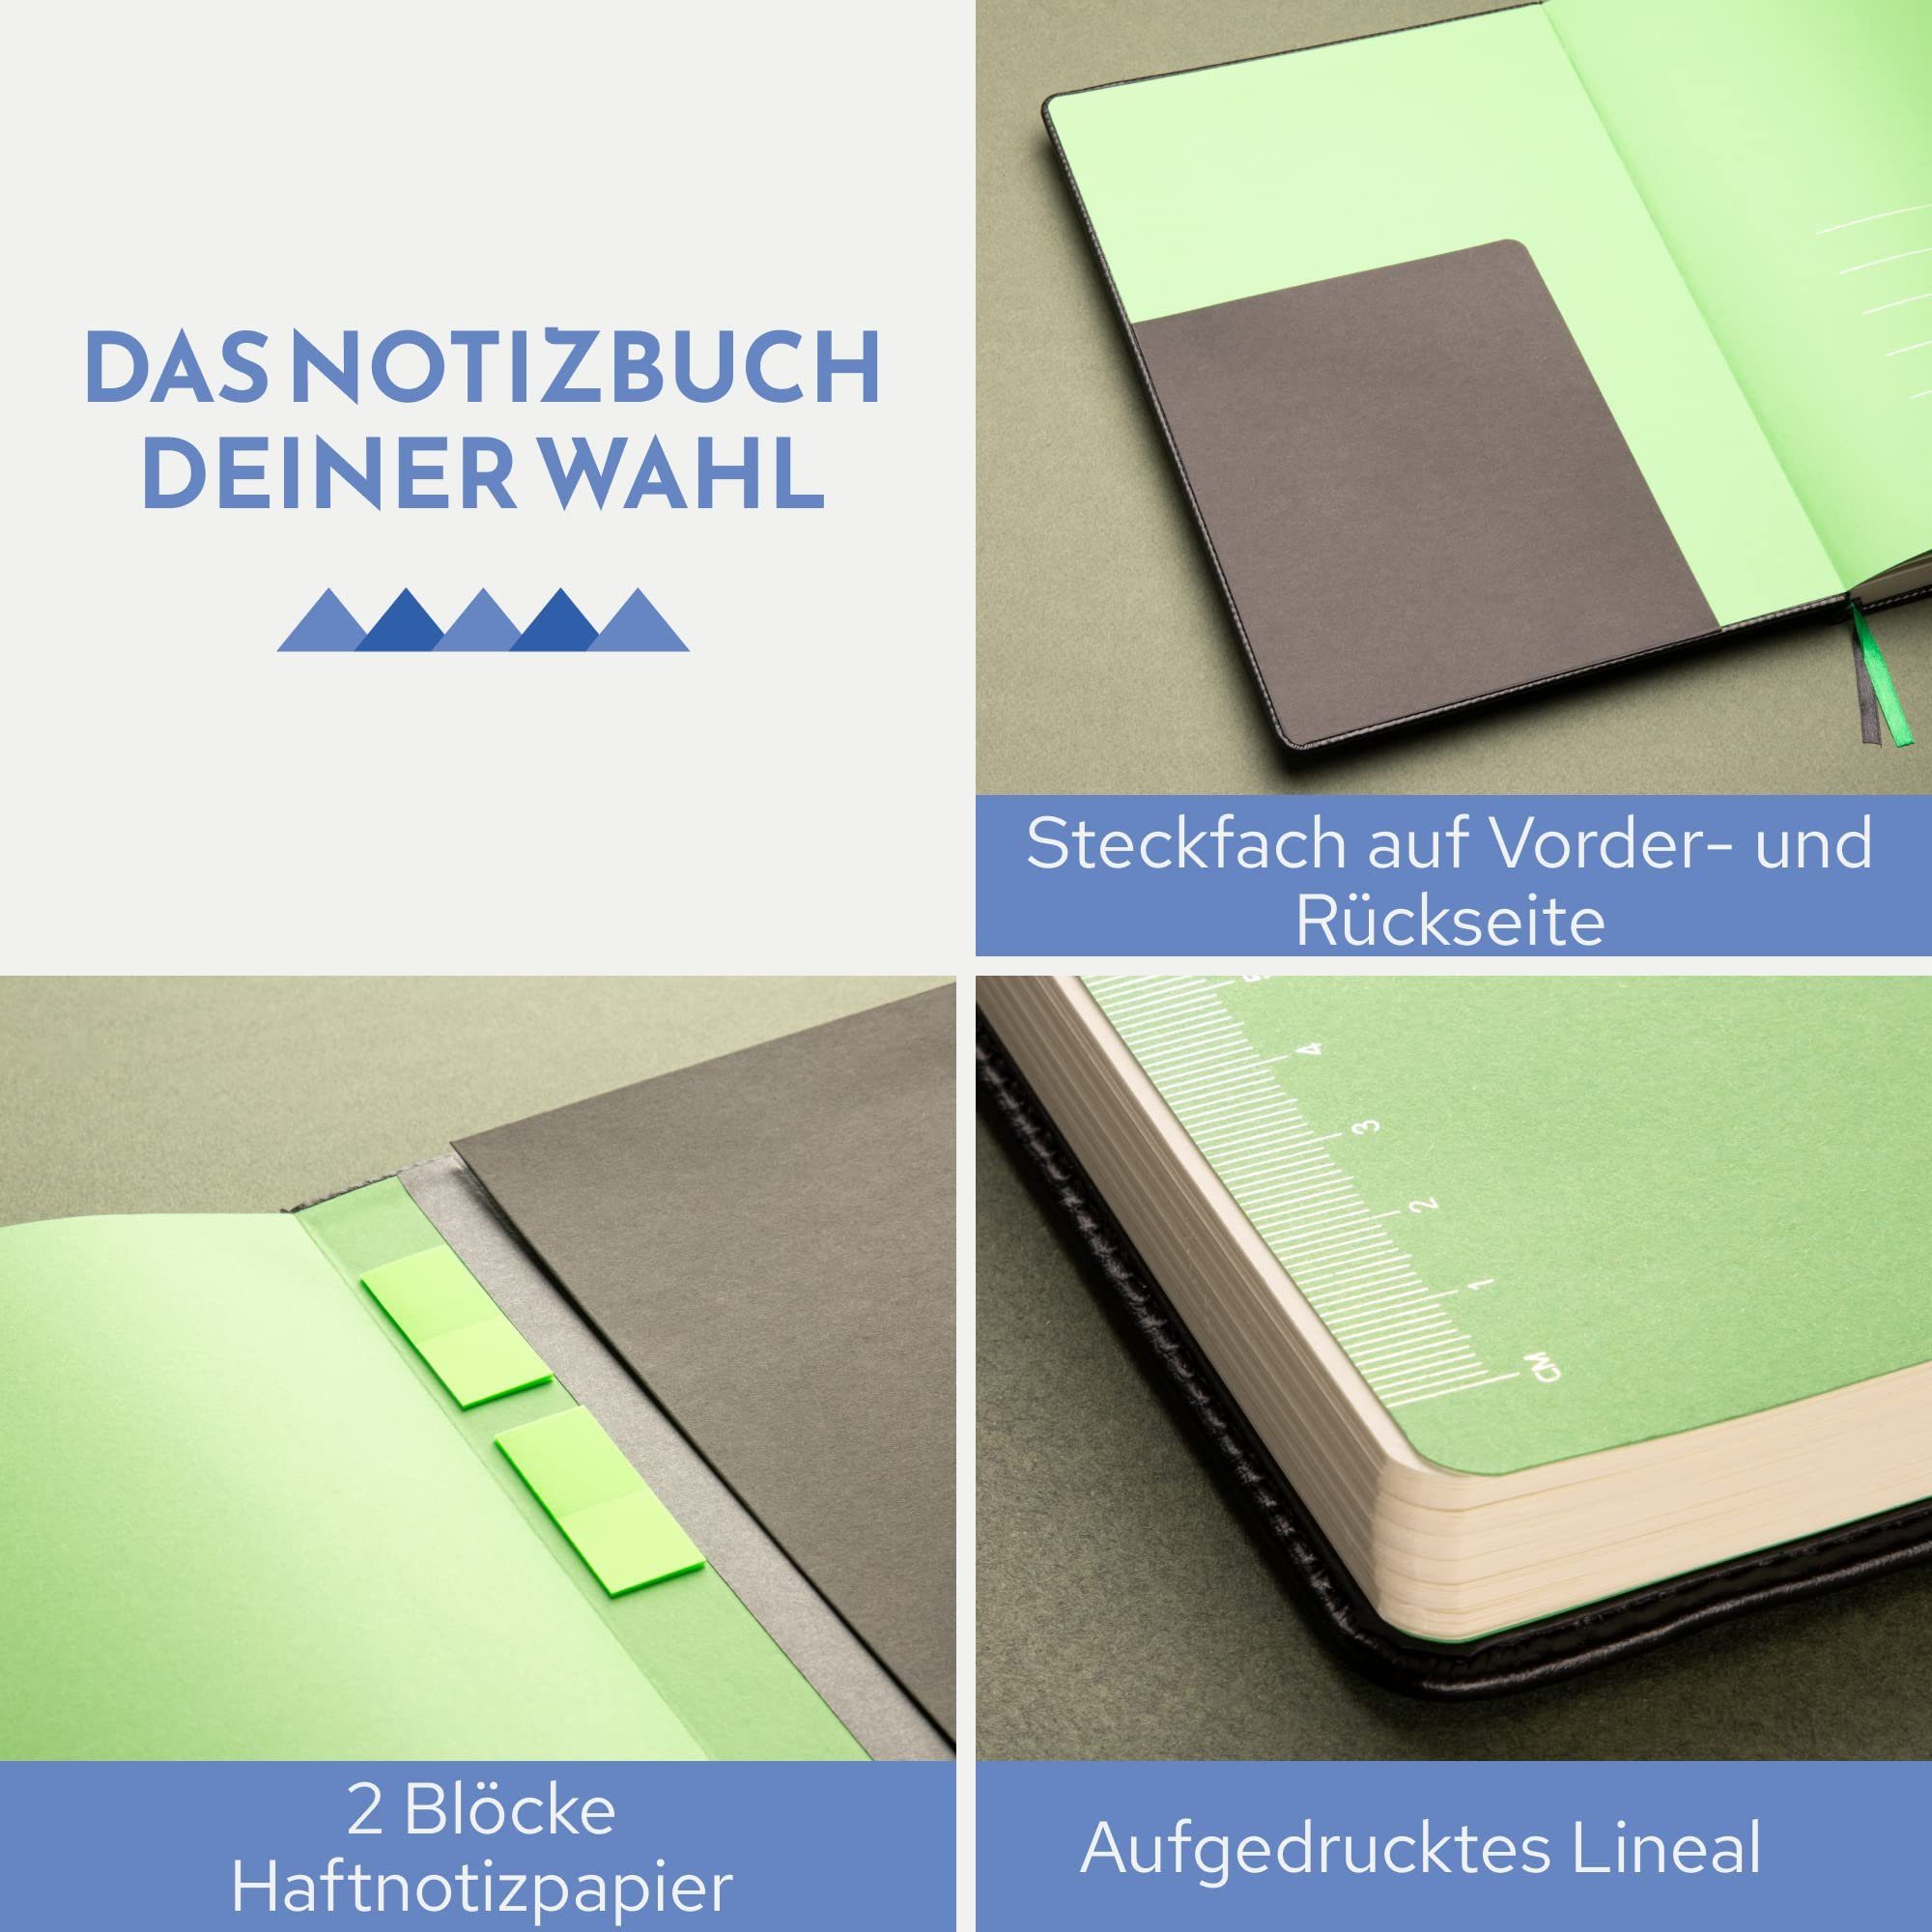 Leder DIN Leder A4, Notizbuch, Schwarz, Hardcover, DIN Schwarzes Notizbuch Hardcover Notizbuch A4 WINTEX